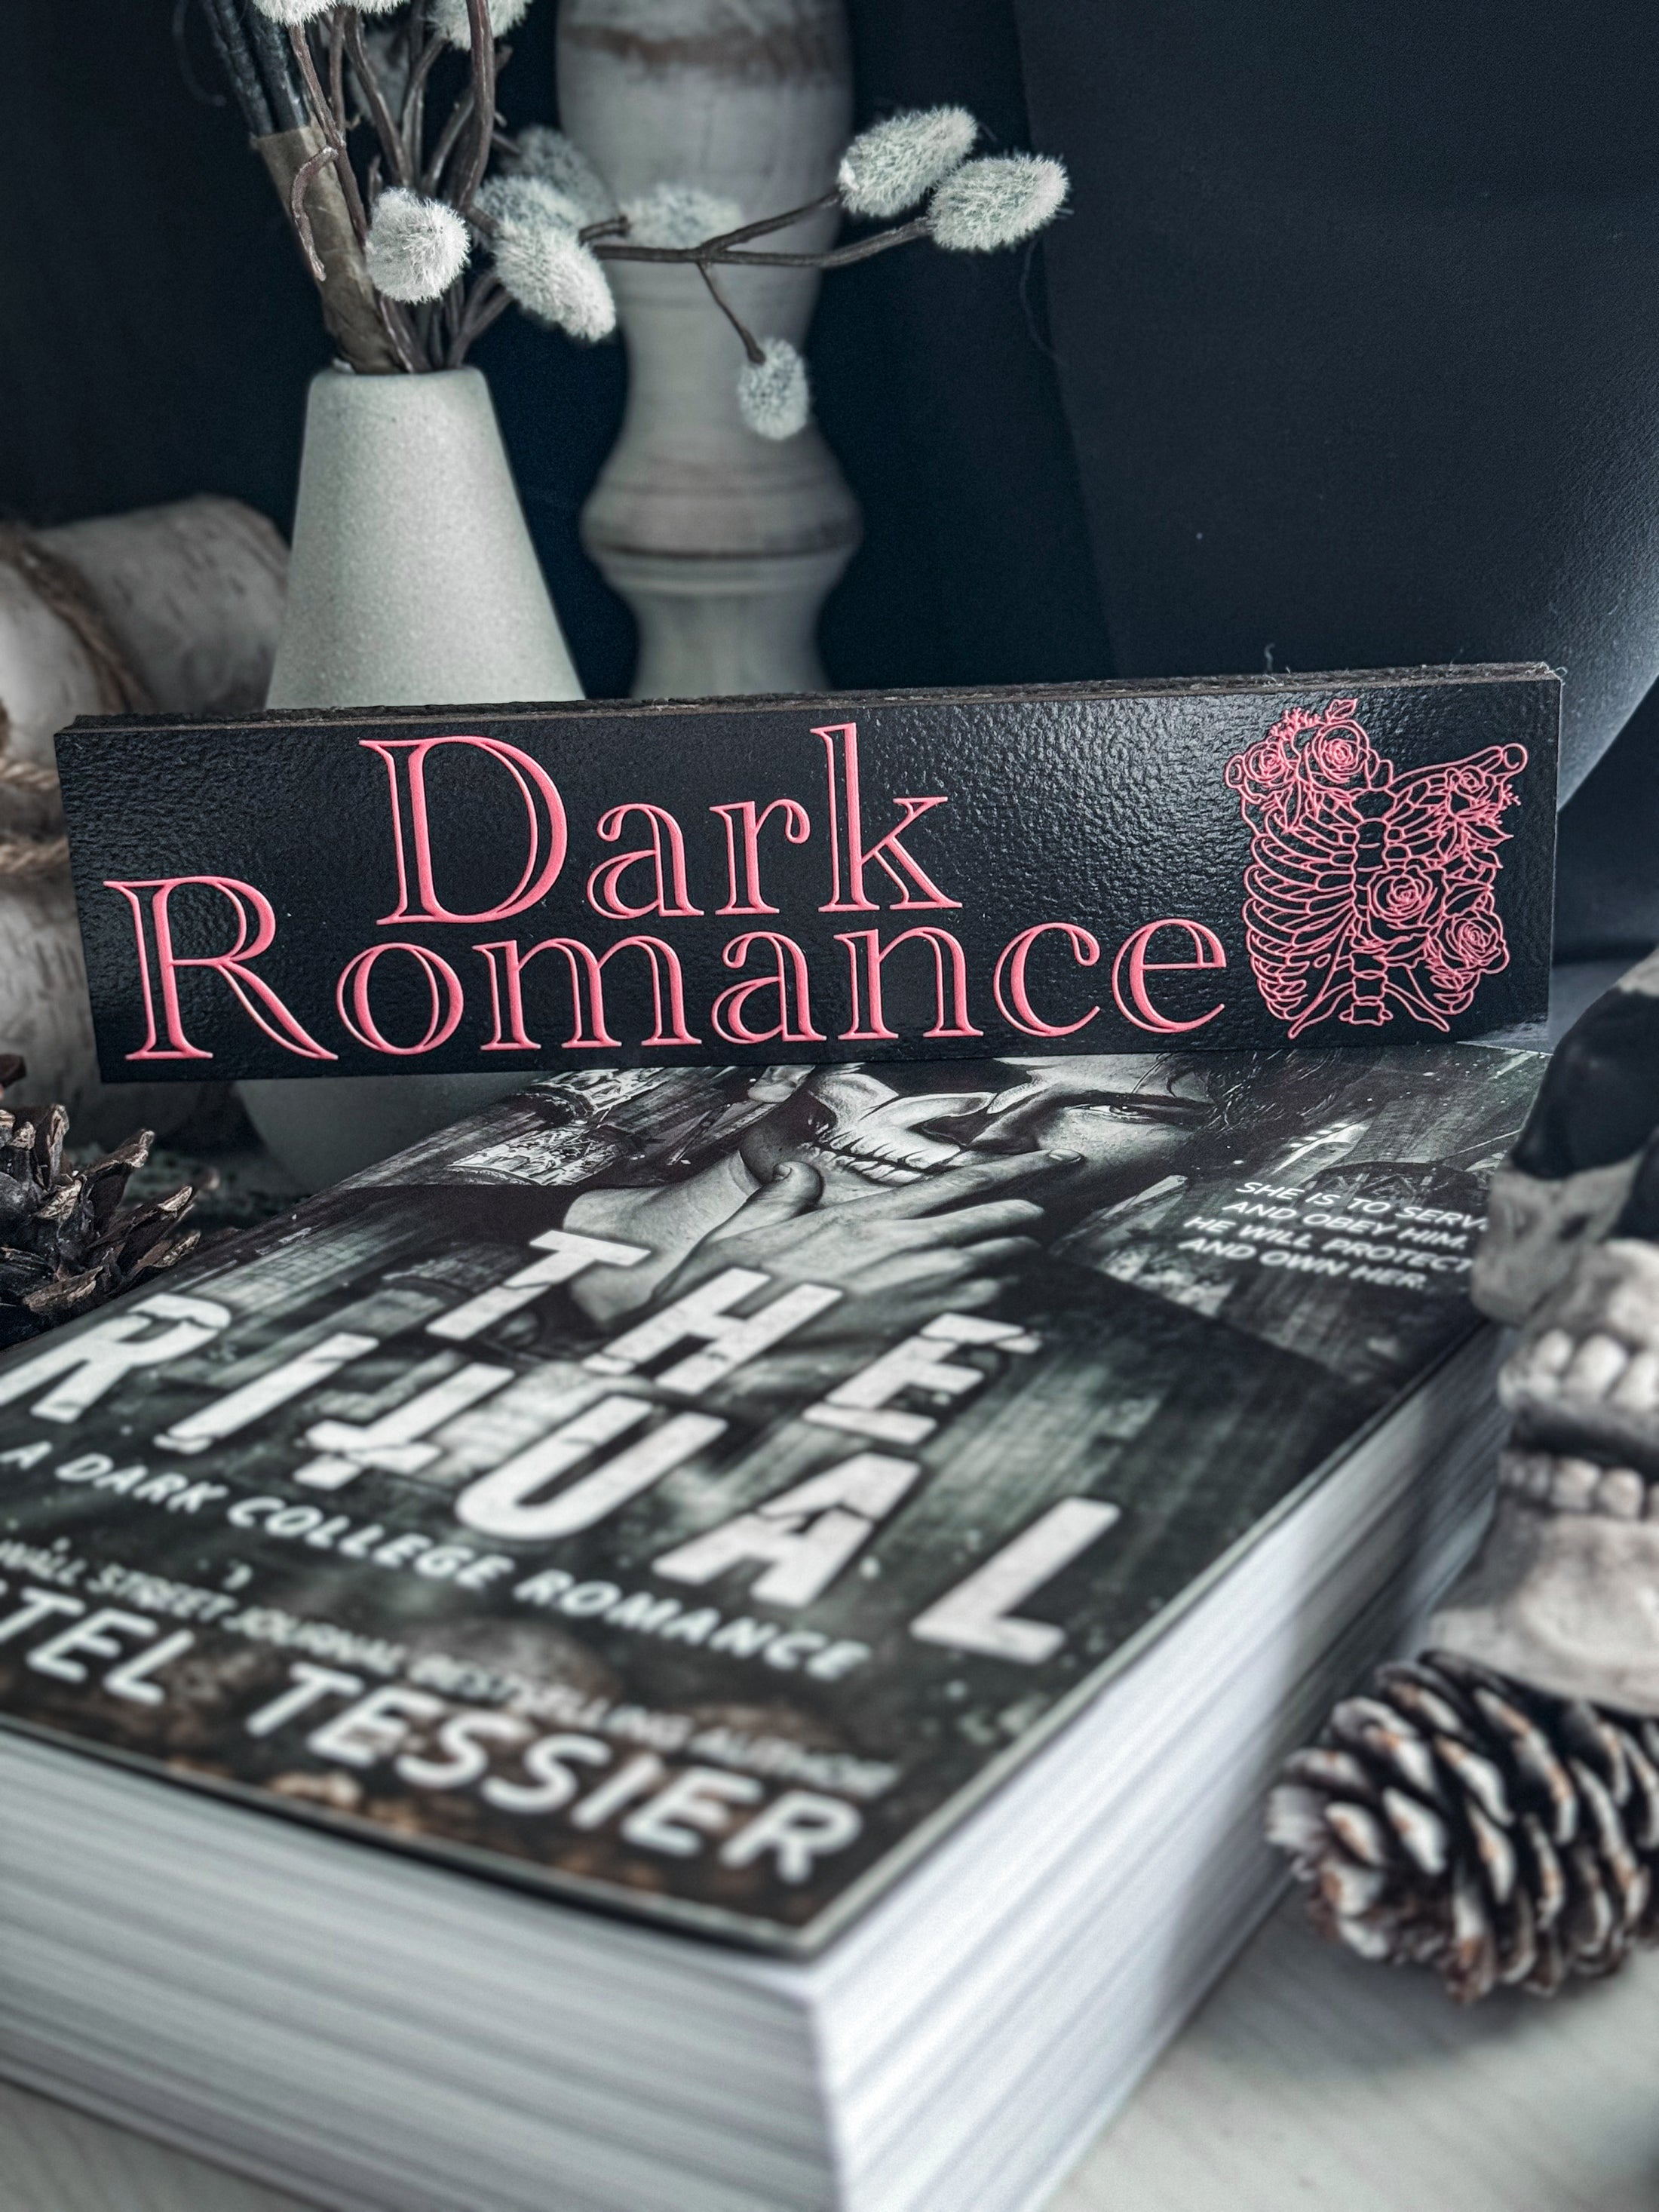 Dark Romance Shelf Mark™ in Black & Hot Pink by FireDrake Artistry™